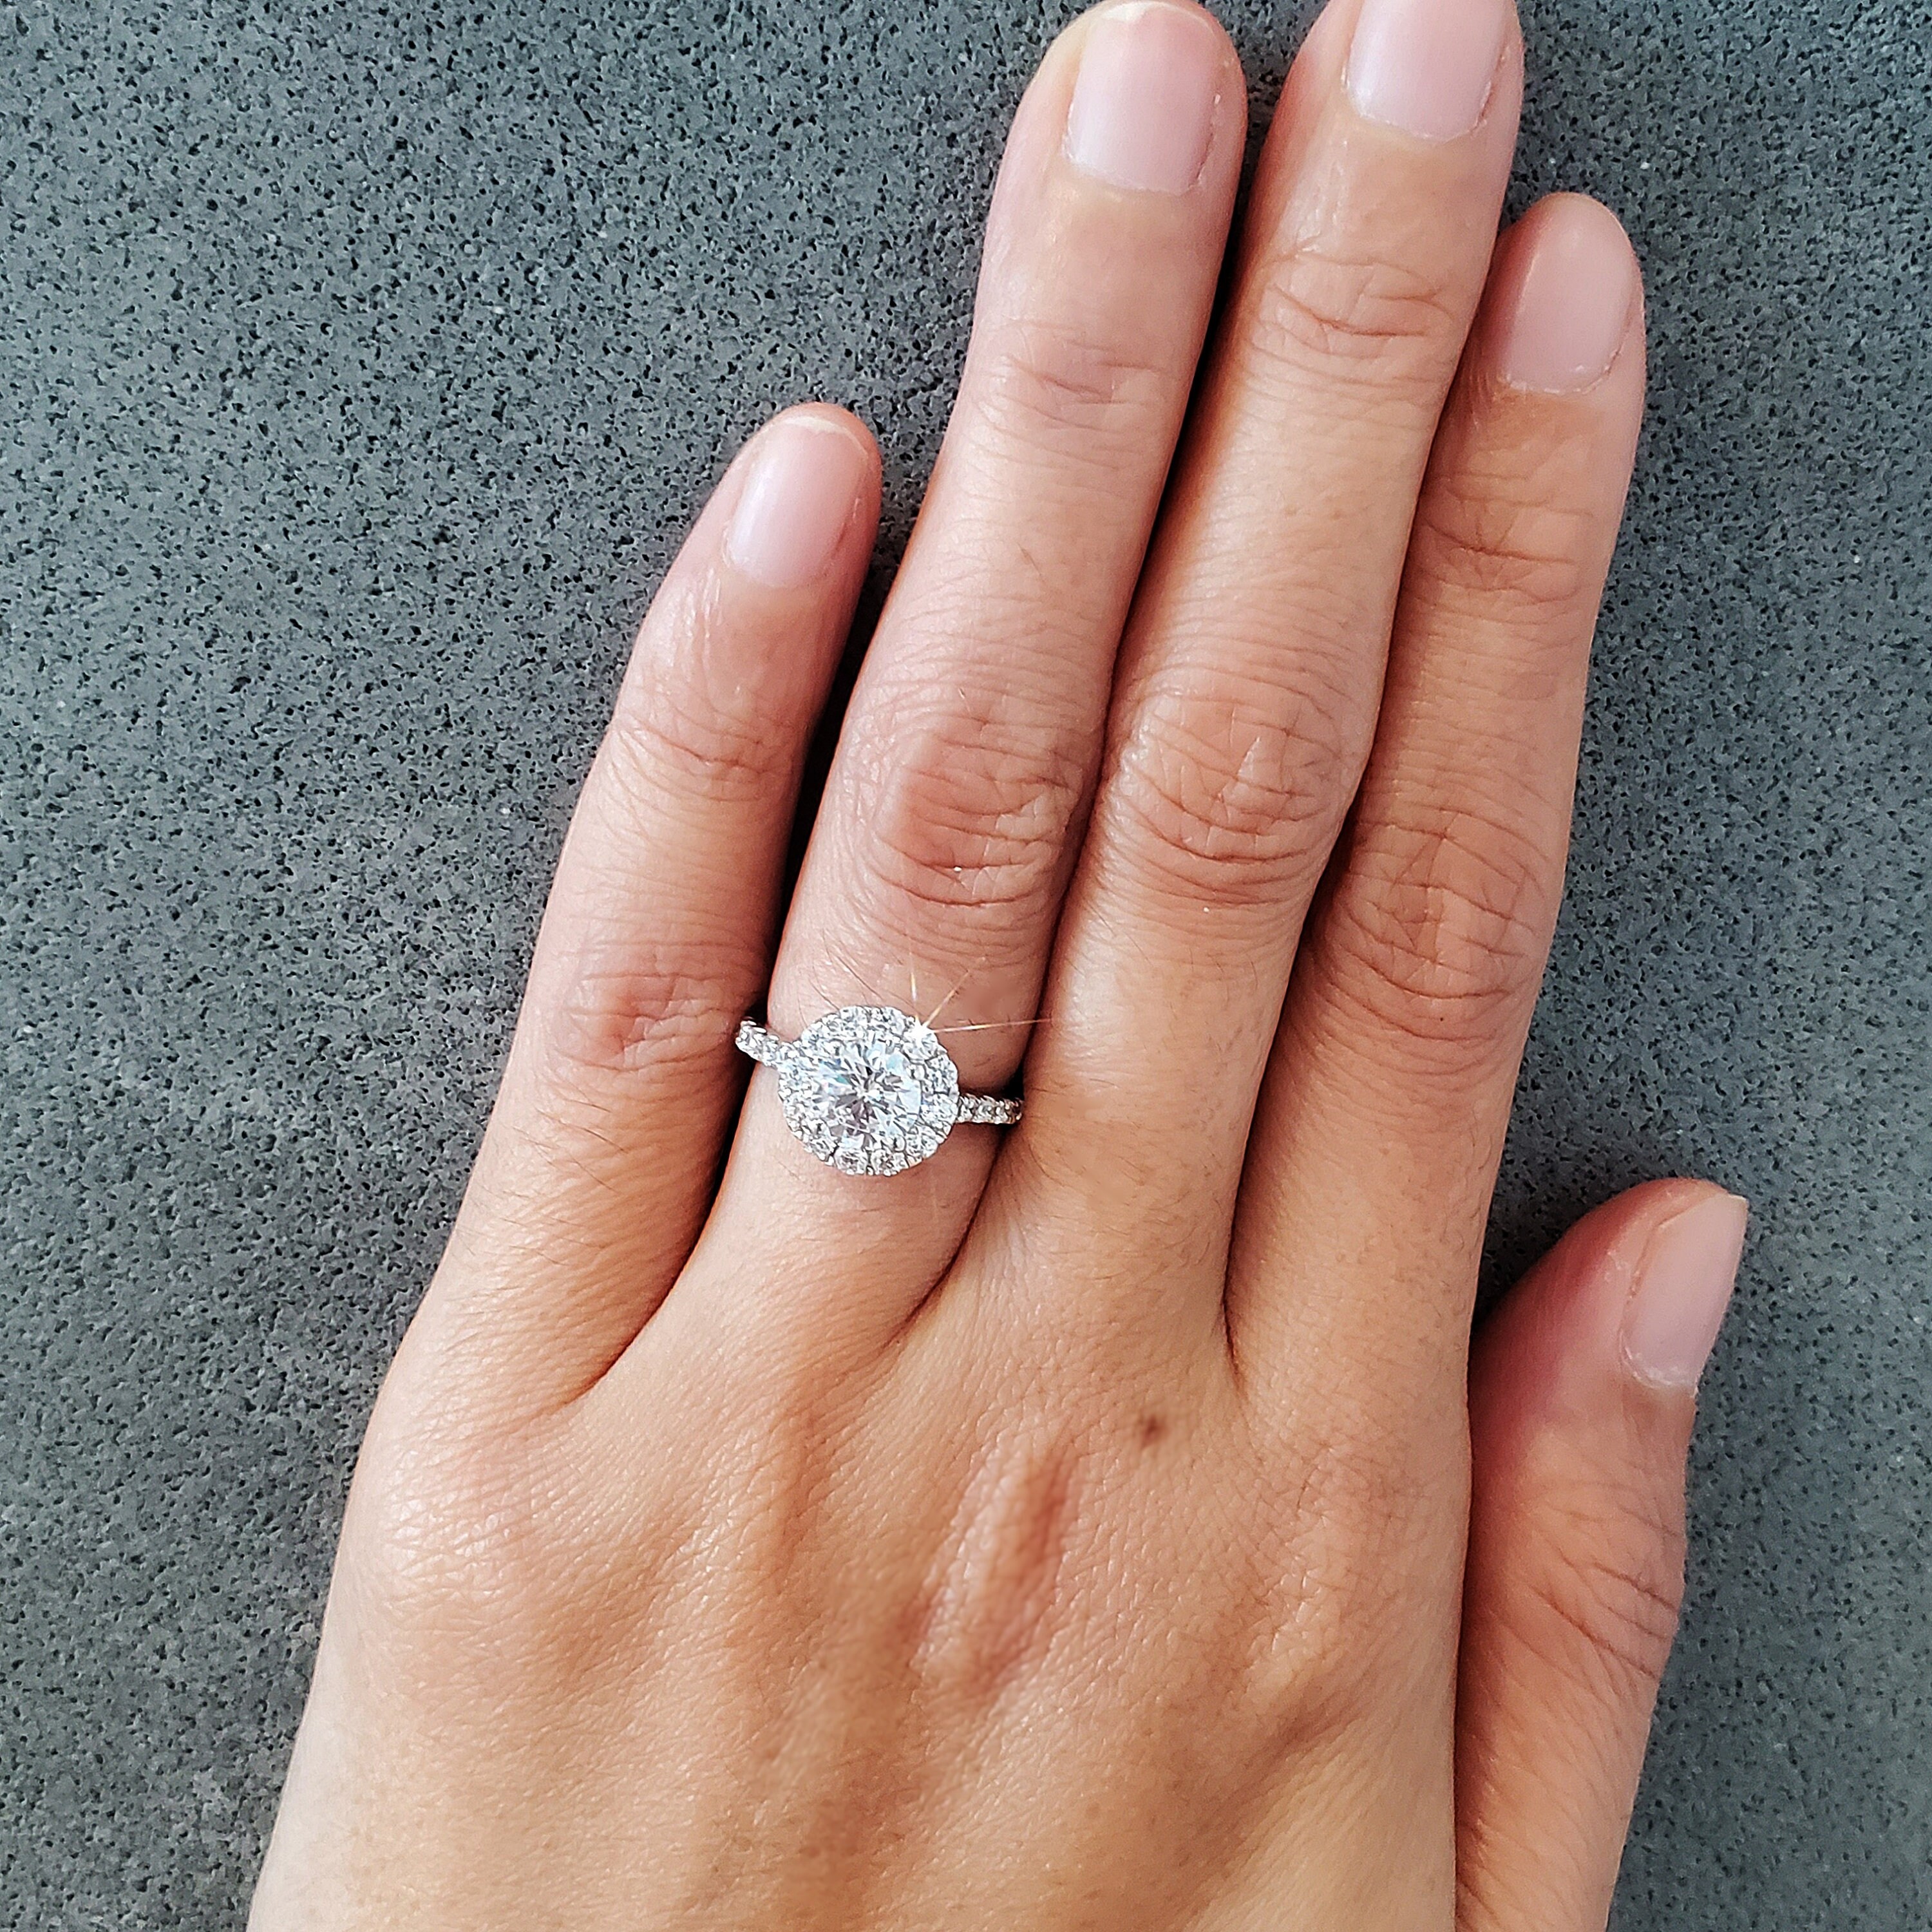 Balsam - 14k White Gold 1 Carat Round Halo Natural Diamond Engagement Ring  @ $3200 | Gabriel & Co.